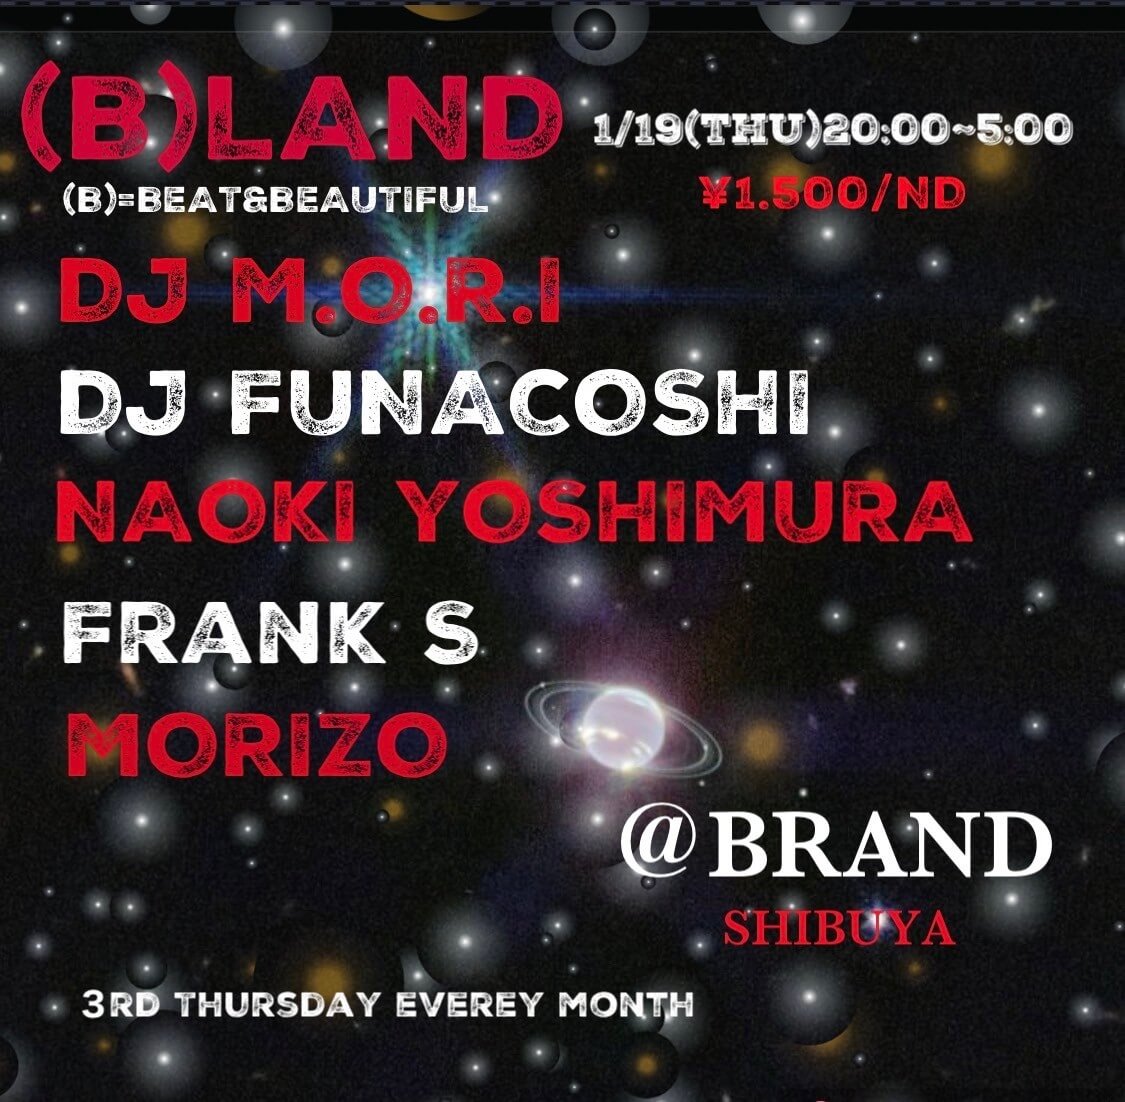 （B）LAND 2023年01月19日（木曜日）に渋谷 クラブのBRAND SHIBUYAで開催されるイベント